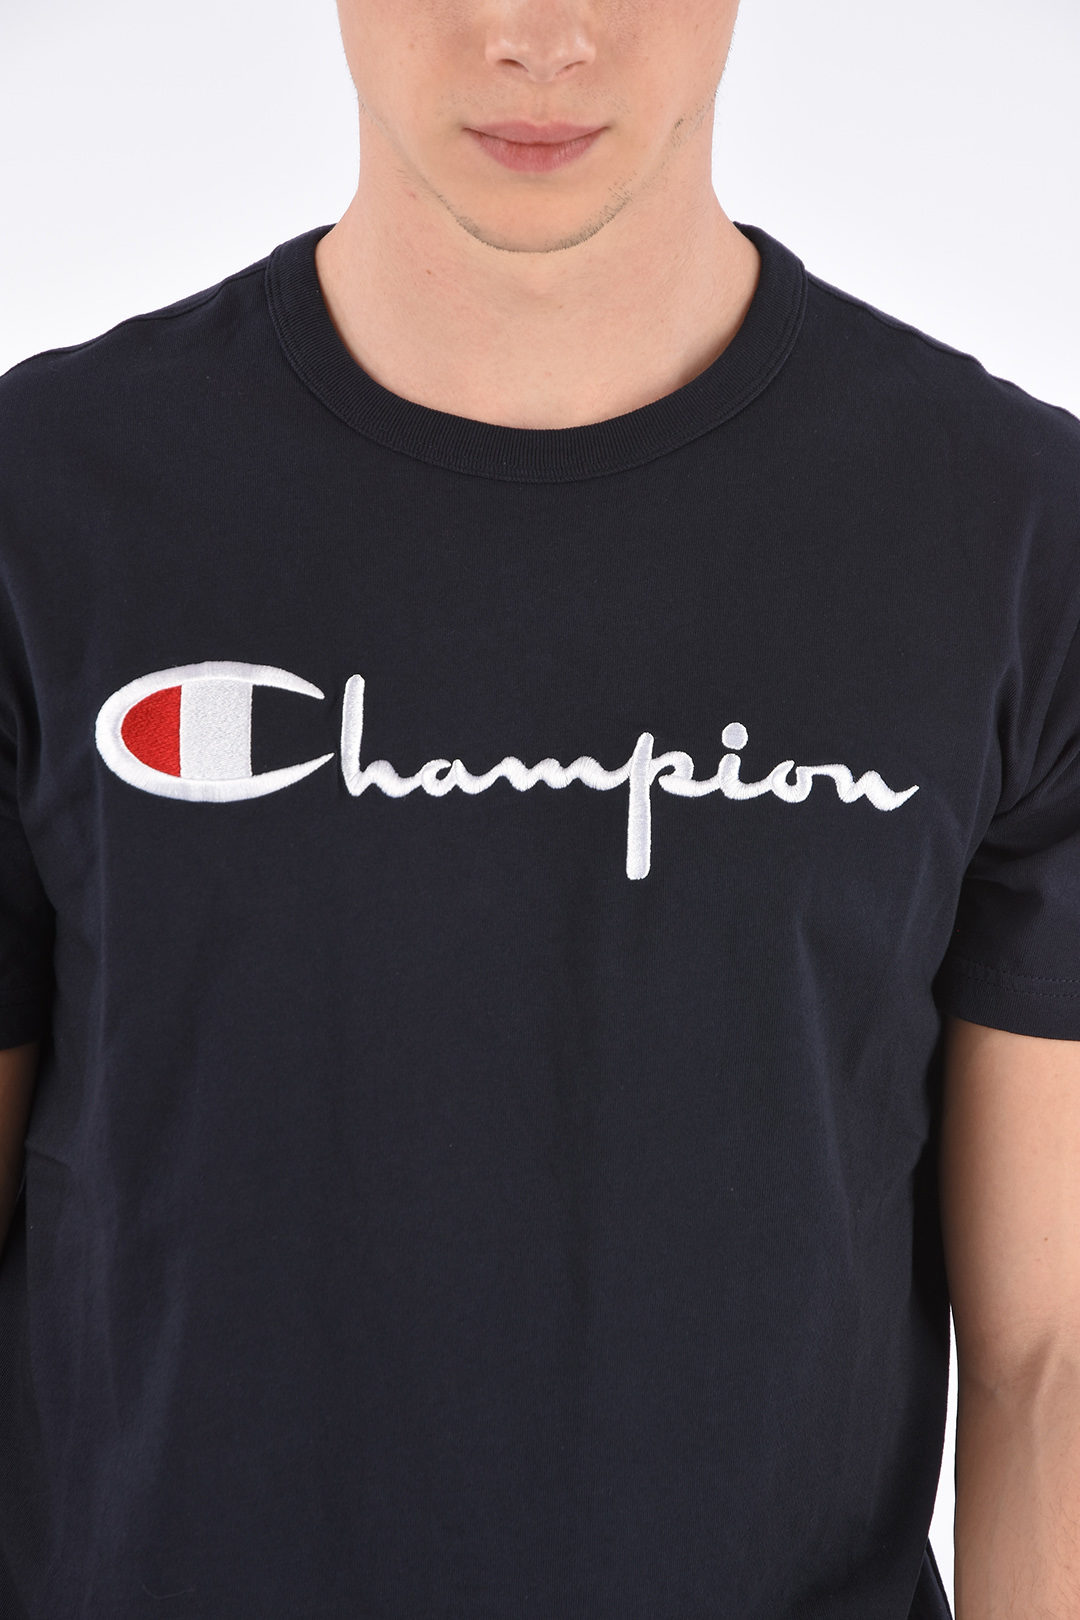 champion t shirt embroidery